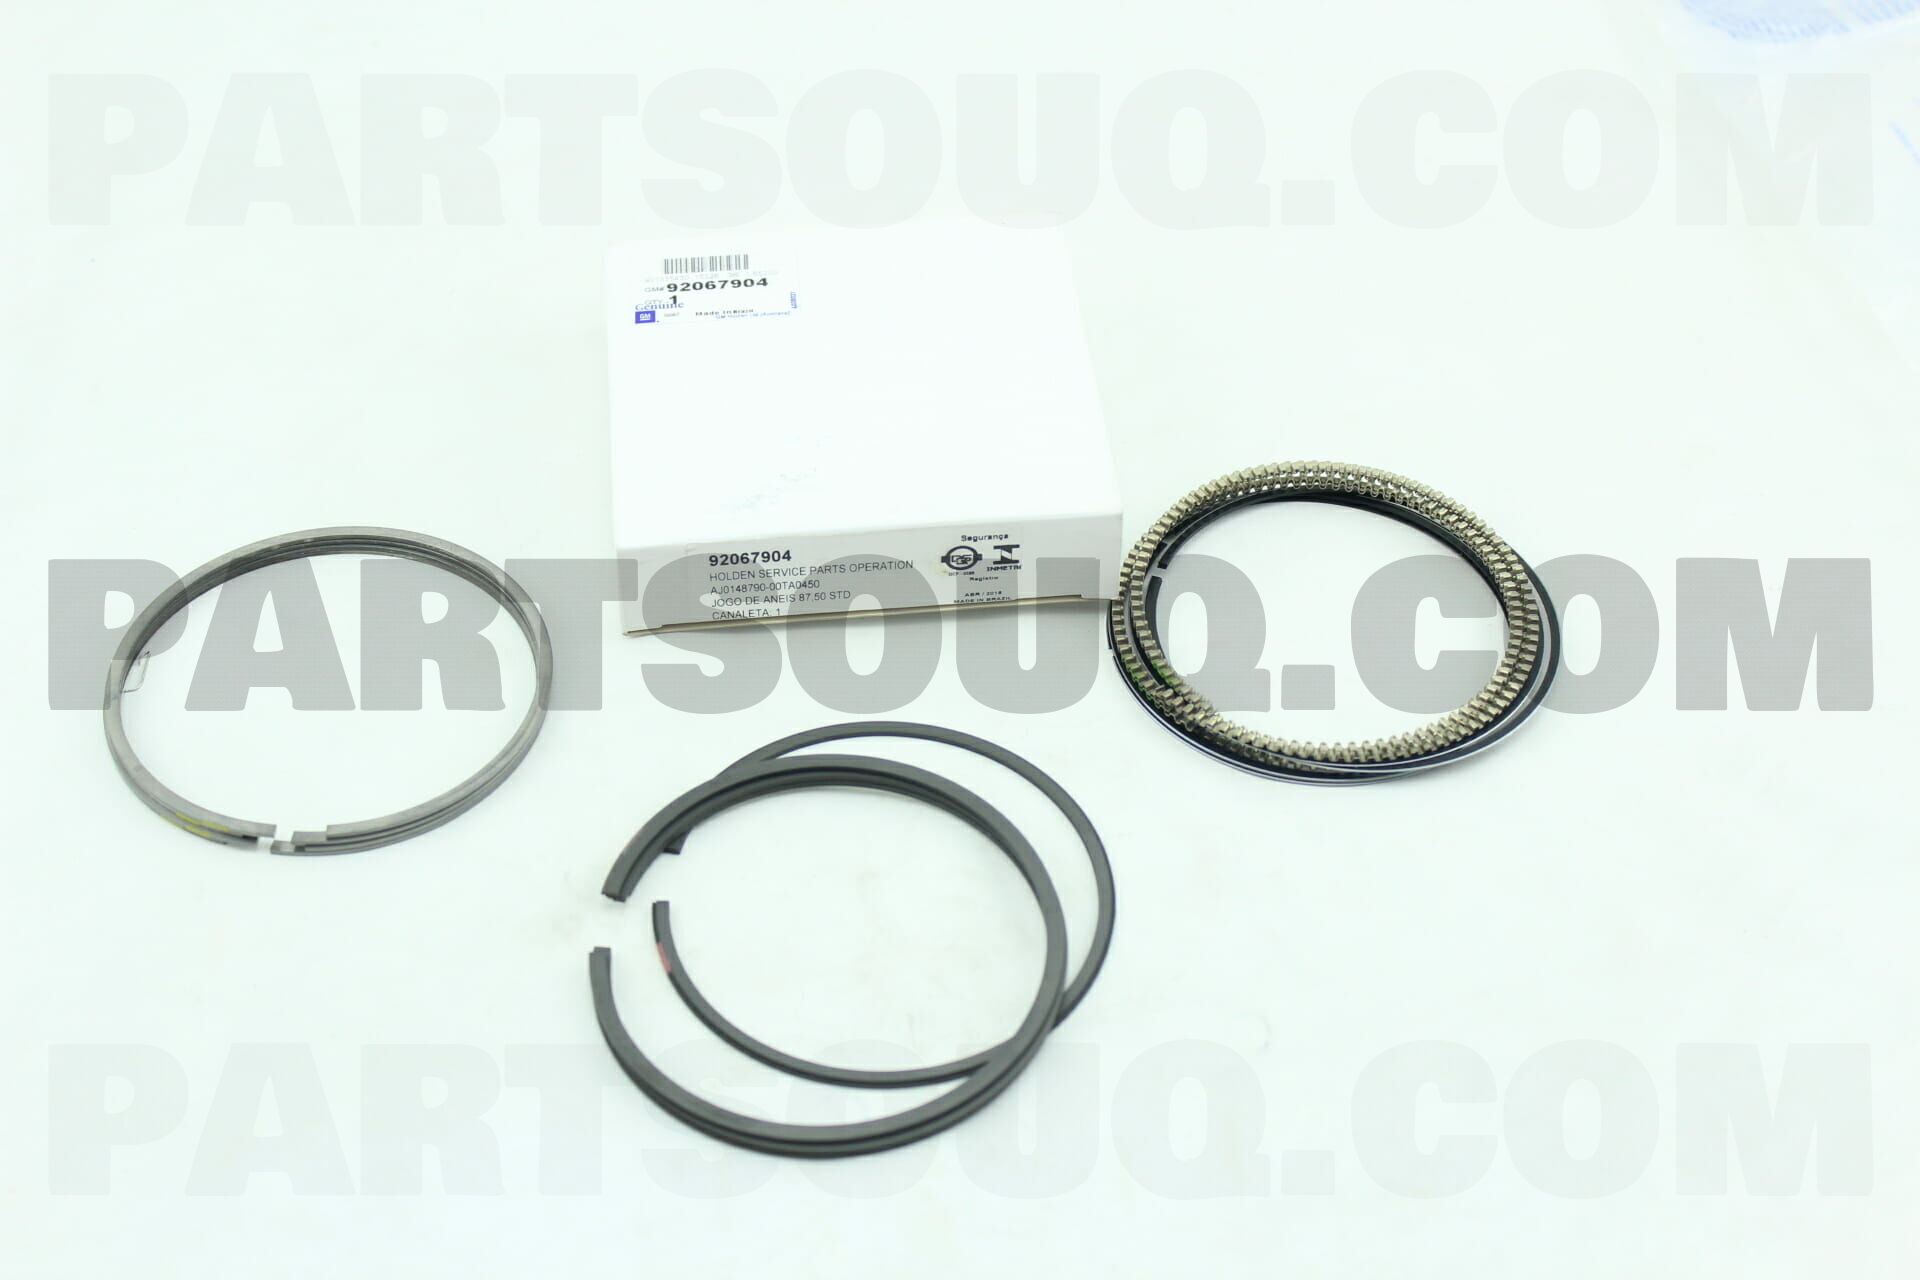 P/RING KIT STD - LD9 - 2.4 92067904 | General Motors Parts | PartSouq